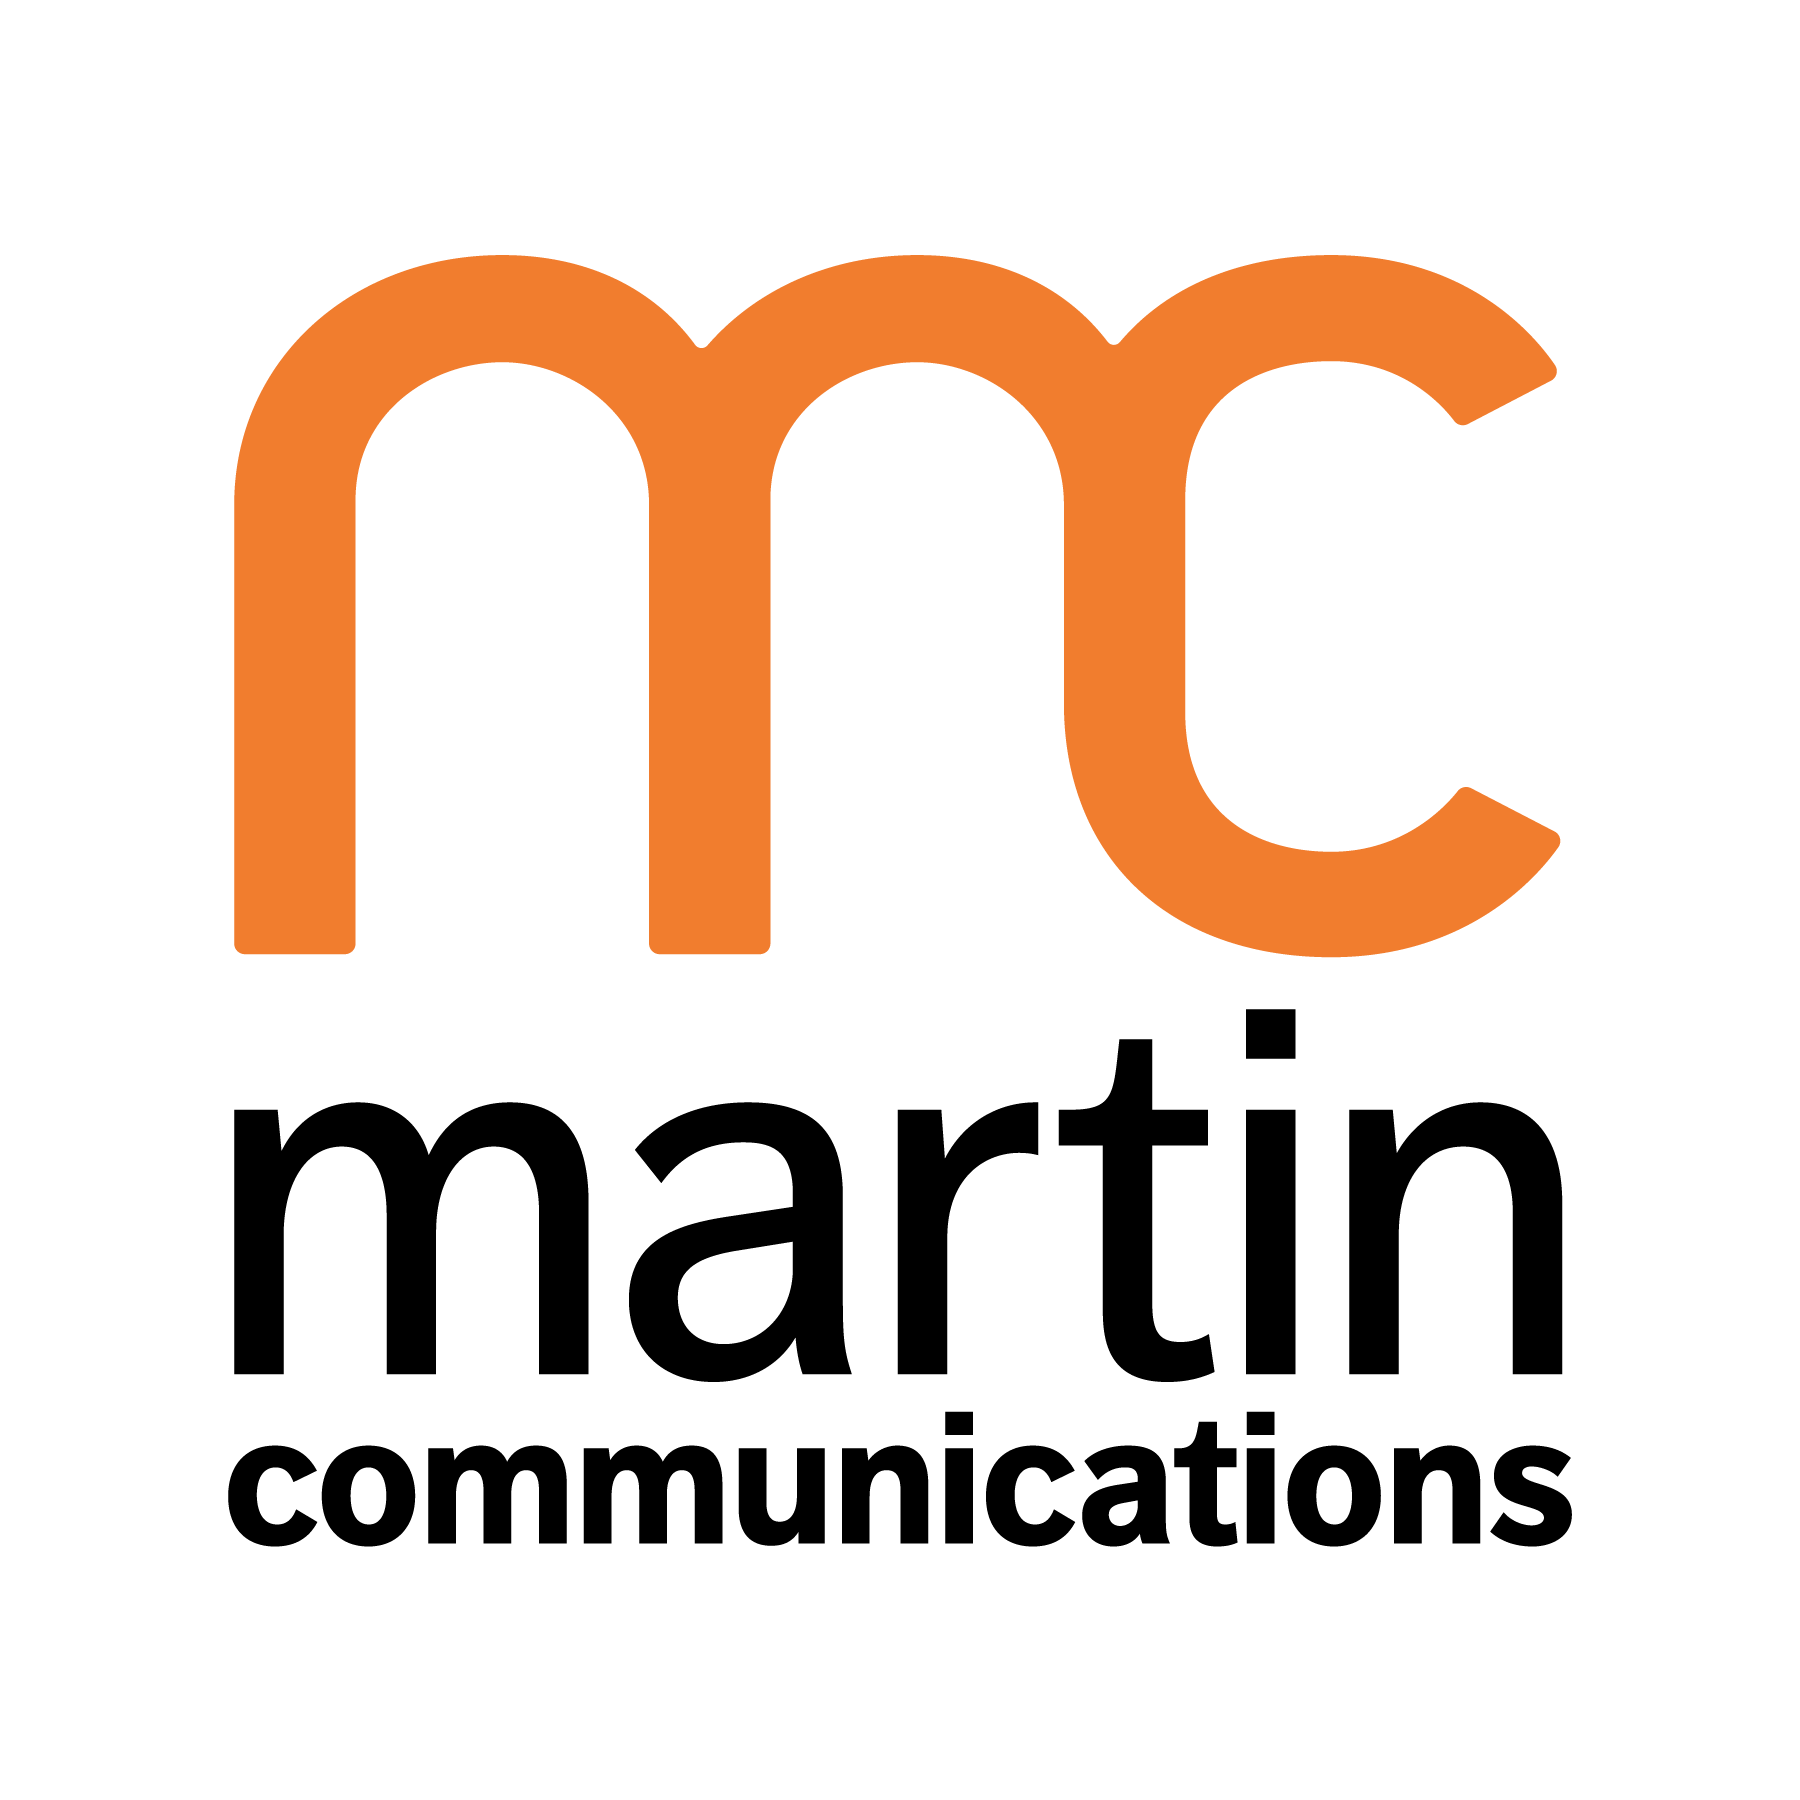 Martin Communications